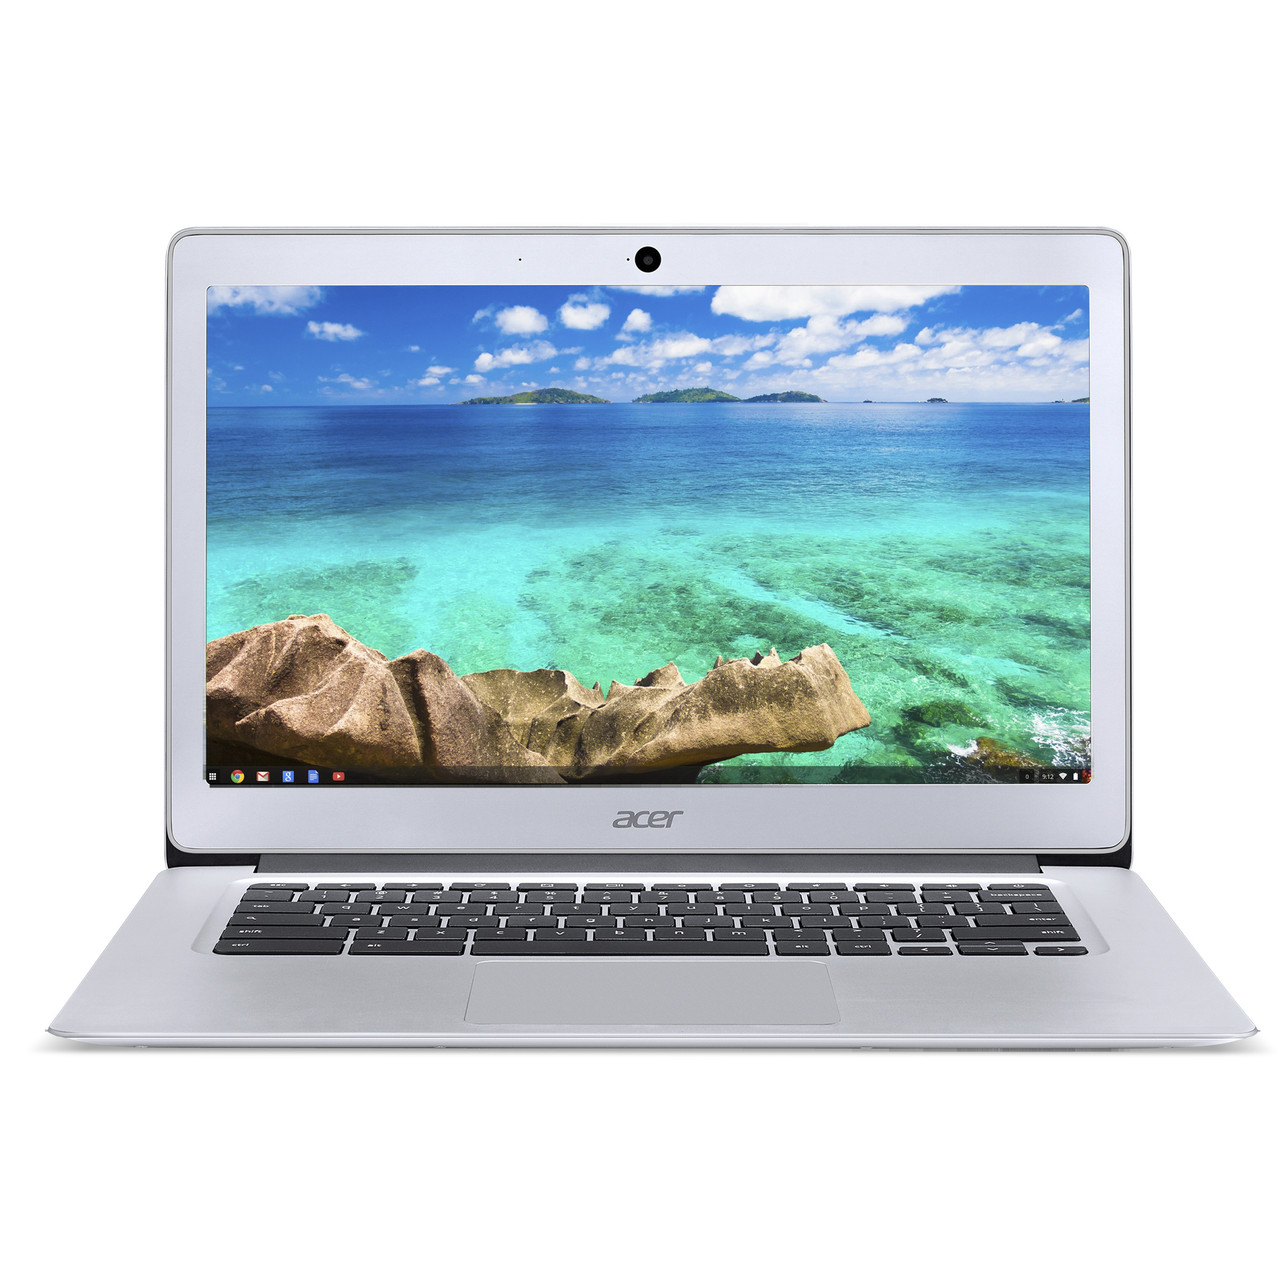 Productie Interesseren Afrekenen Acer Chromebook 14" Display IPS Screen 4GB Ram 32GB Flash ChromeOS Laptop